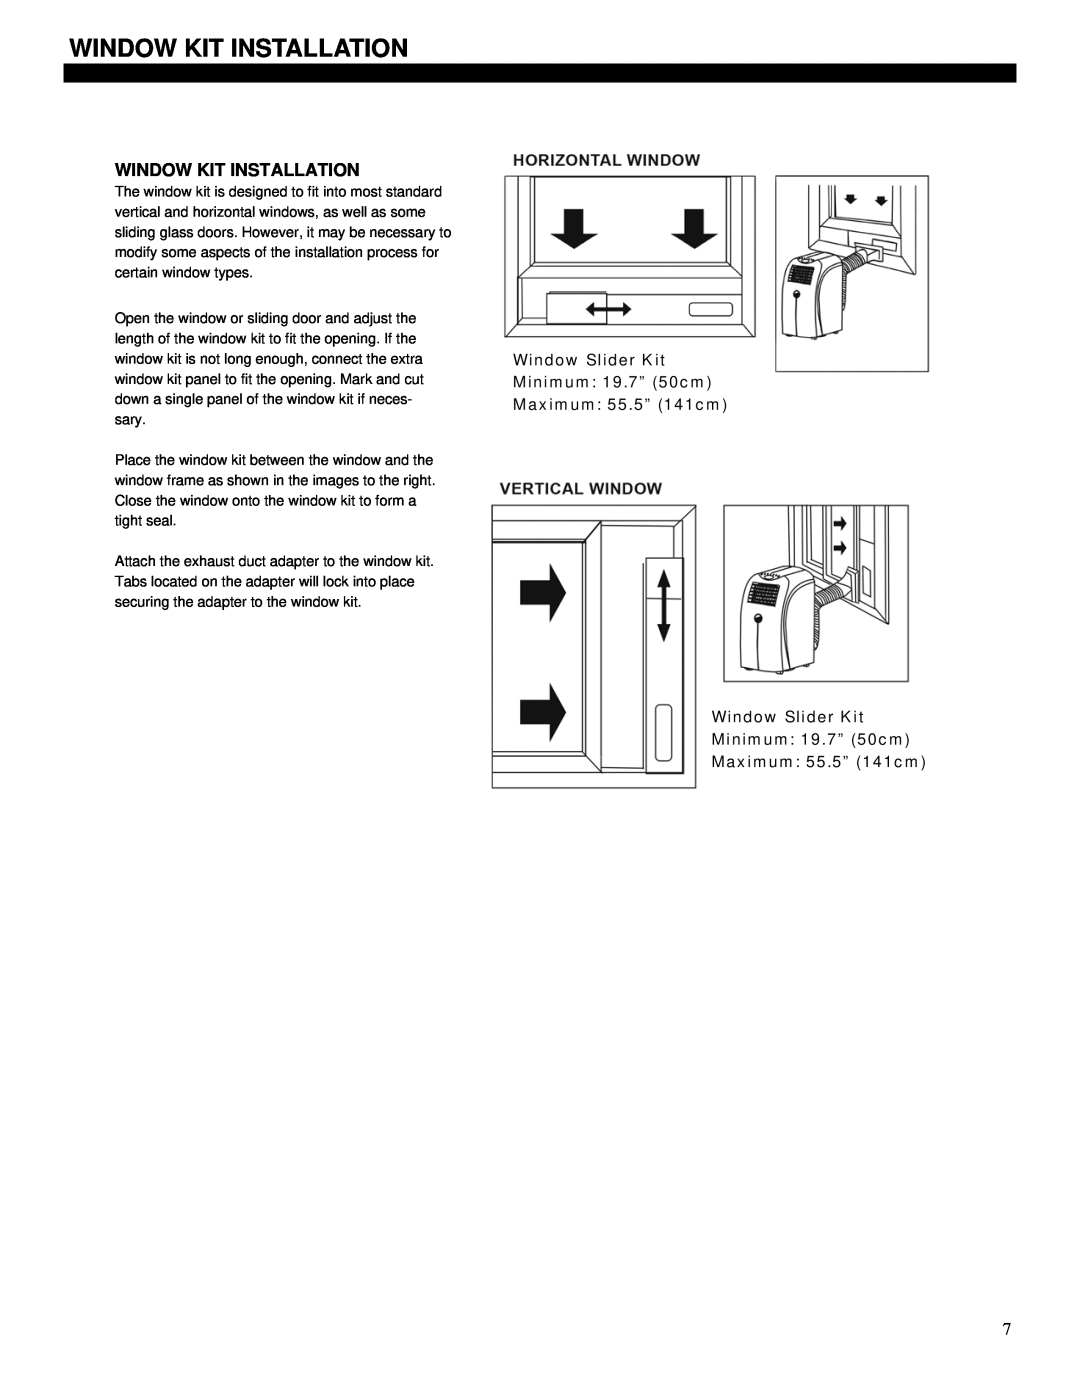 Soleus Air PE6-10R-03 manual Window Kit Installation 